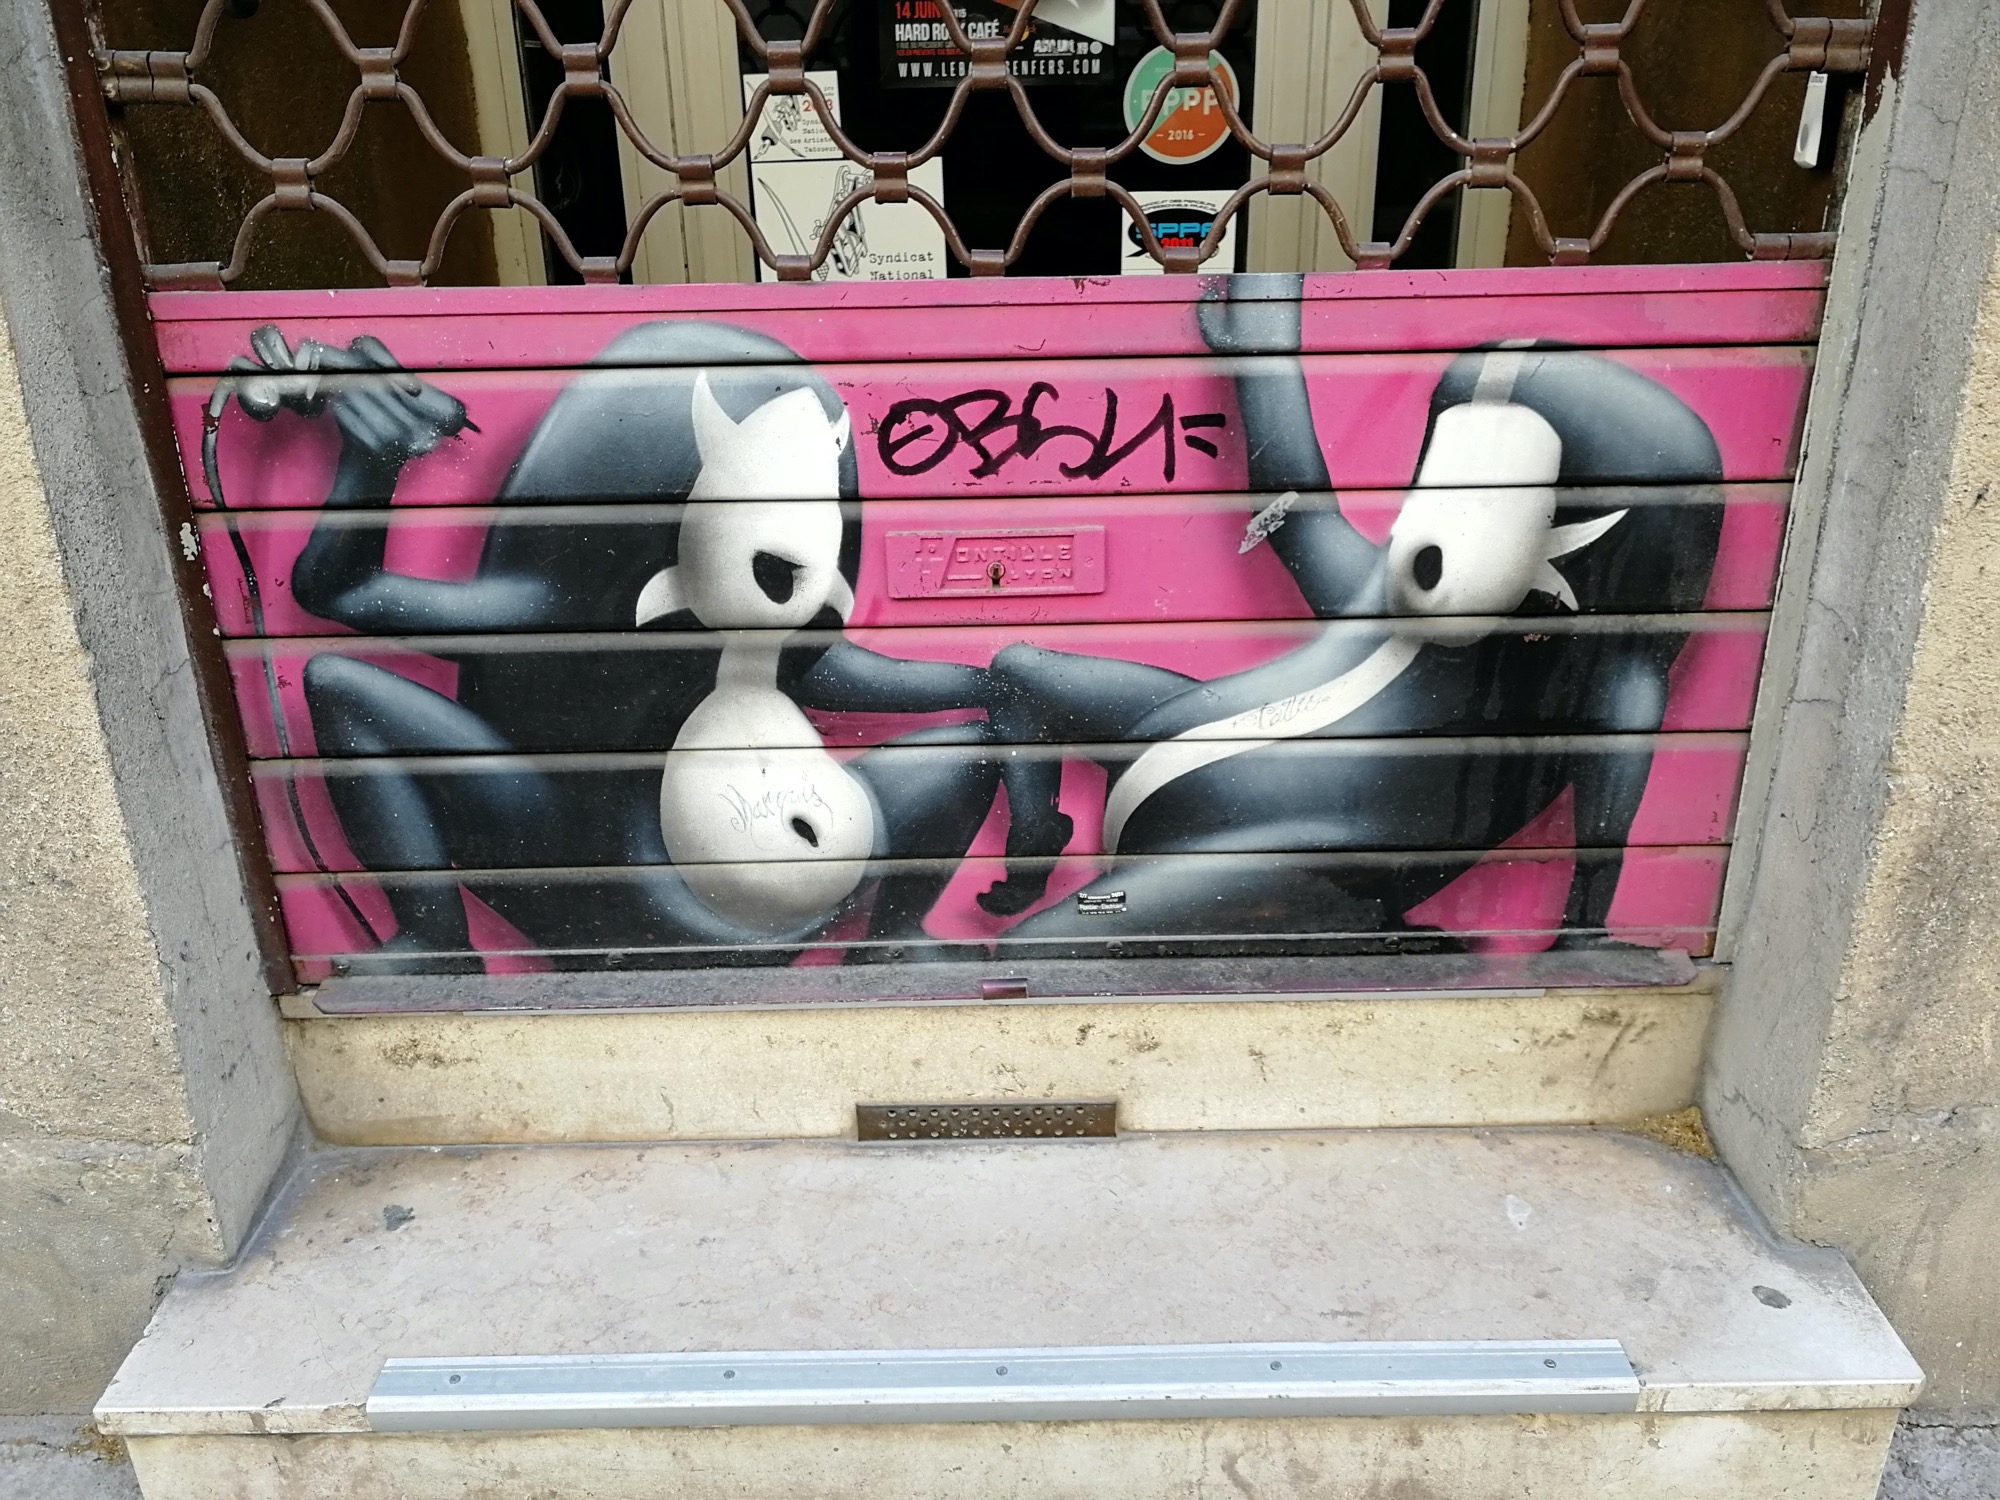 Graffiti 1602  captured by Rabot in Lyon France